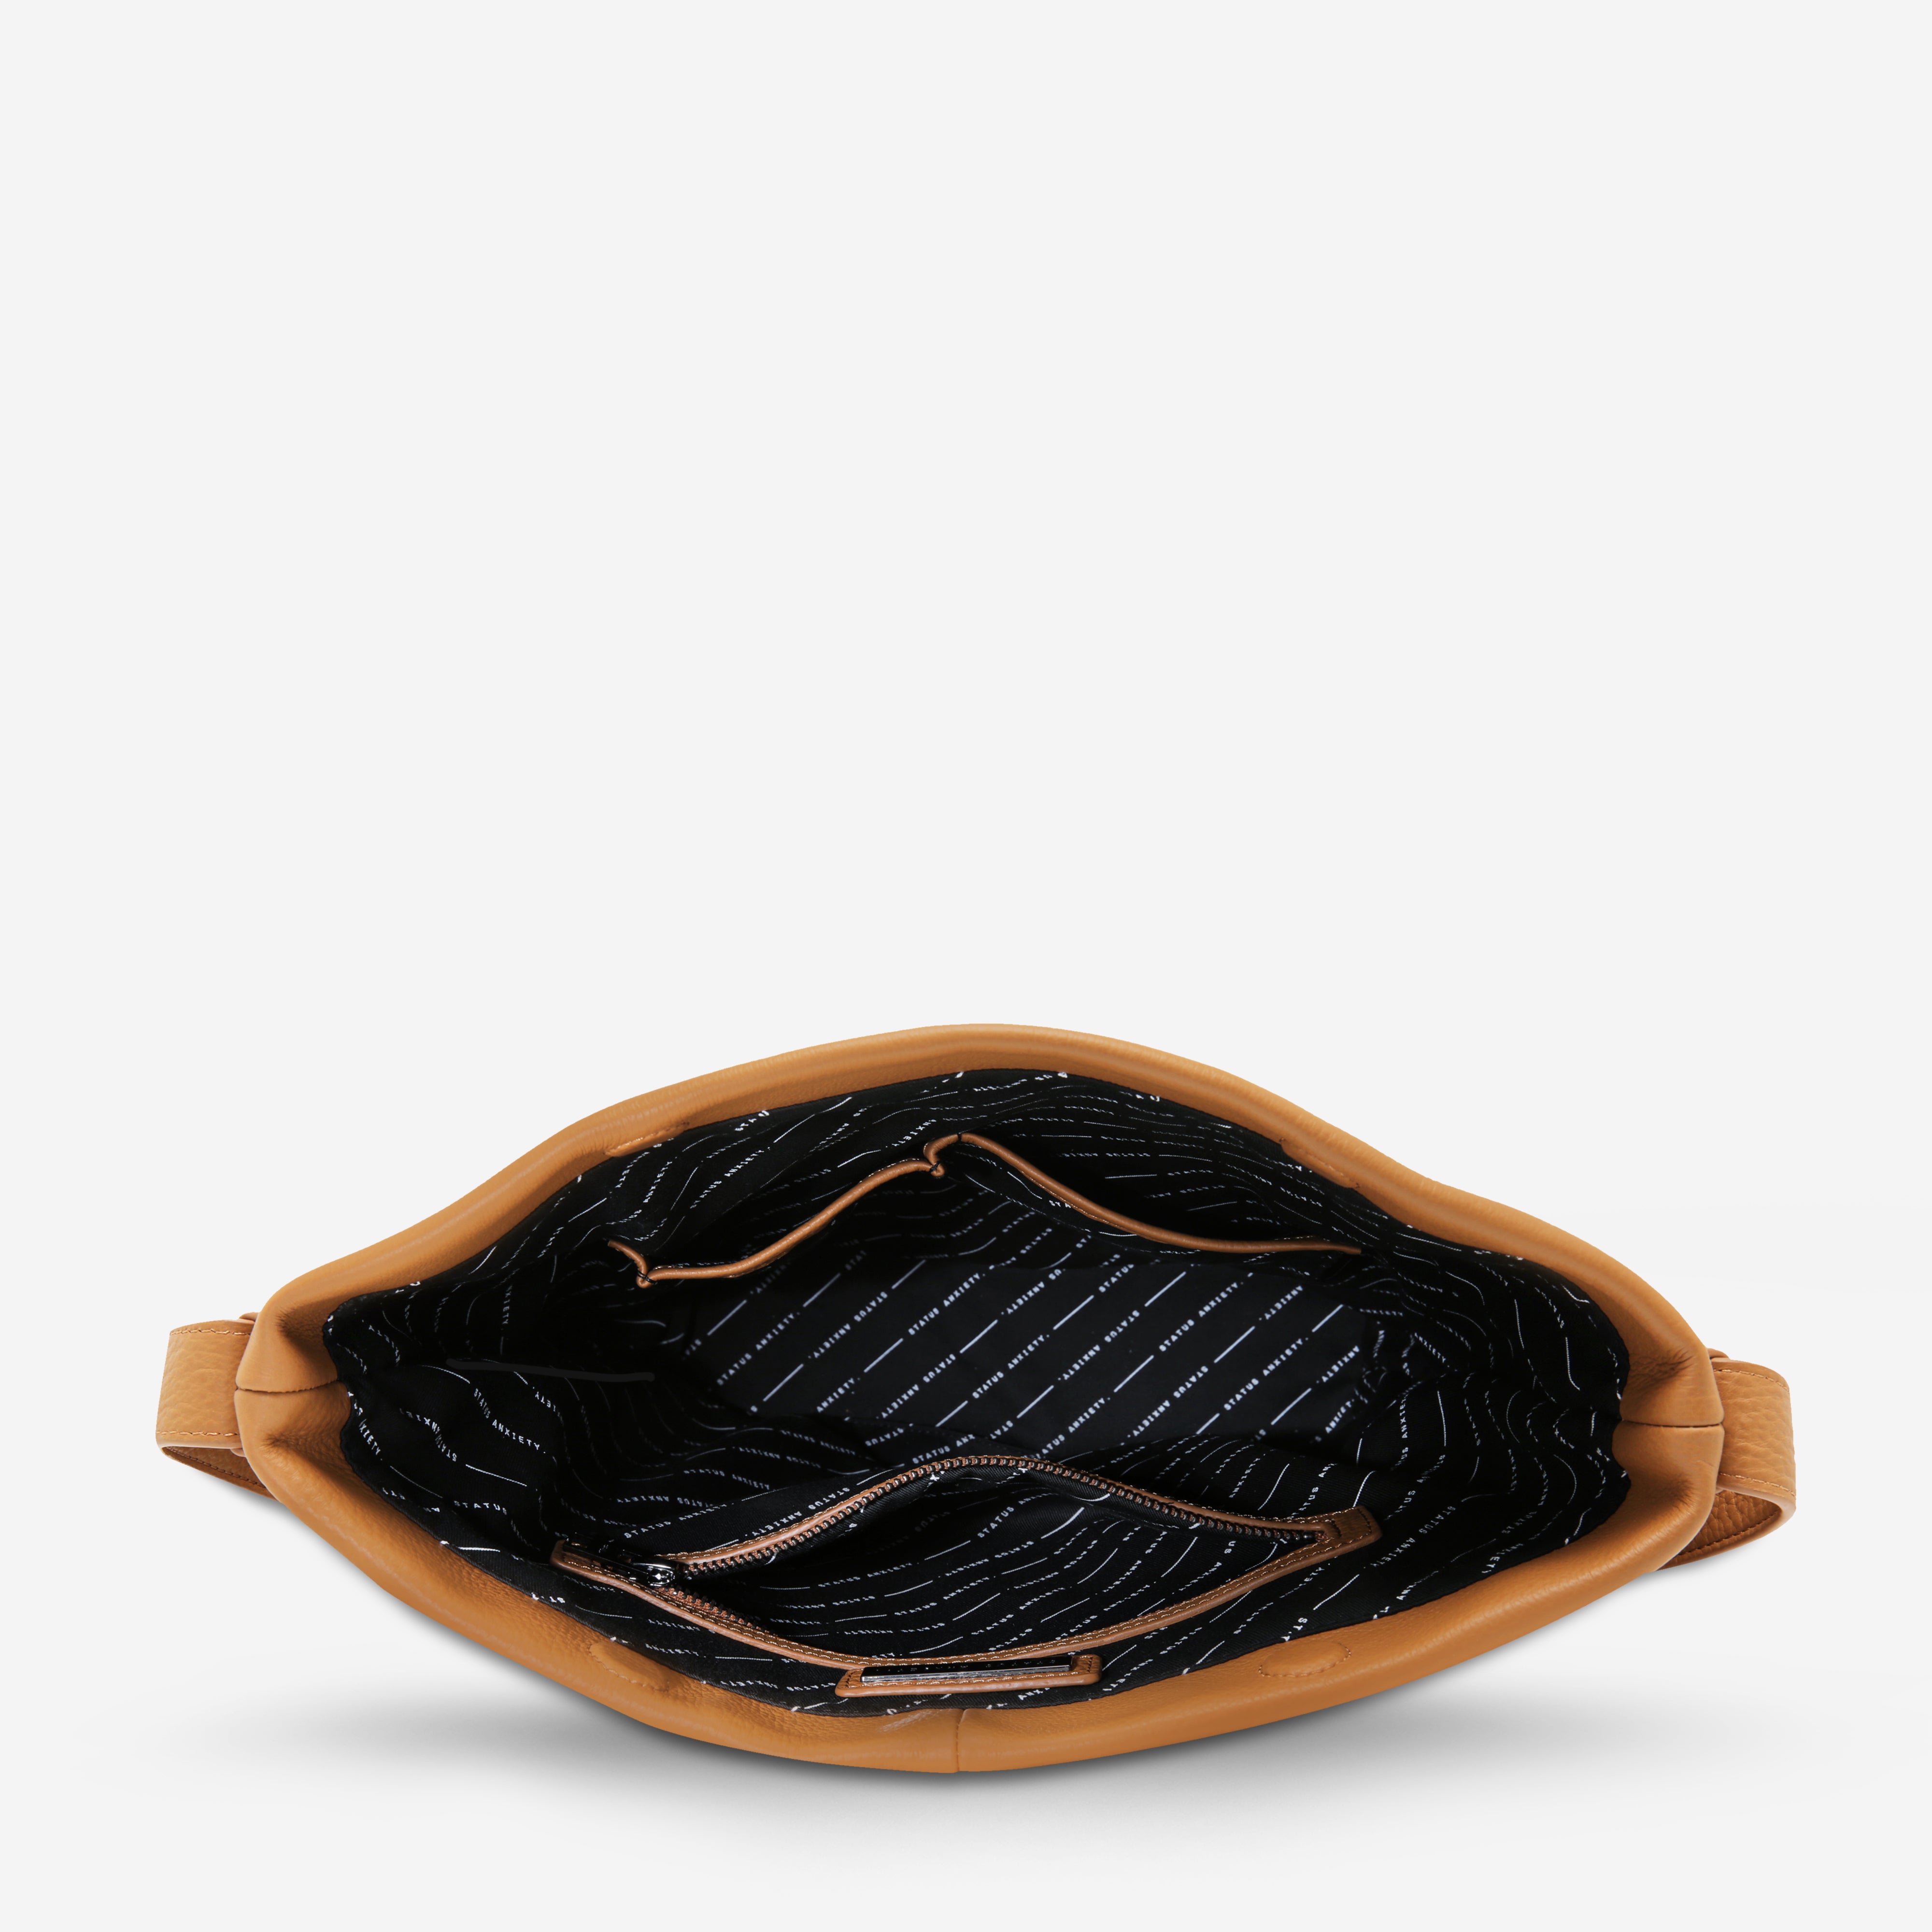 Brown Black Leopard Print Patent Leather Bag - Schandra